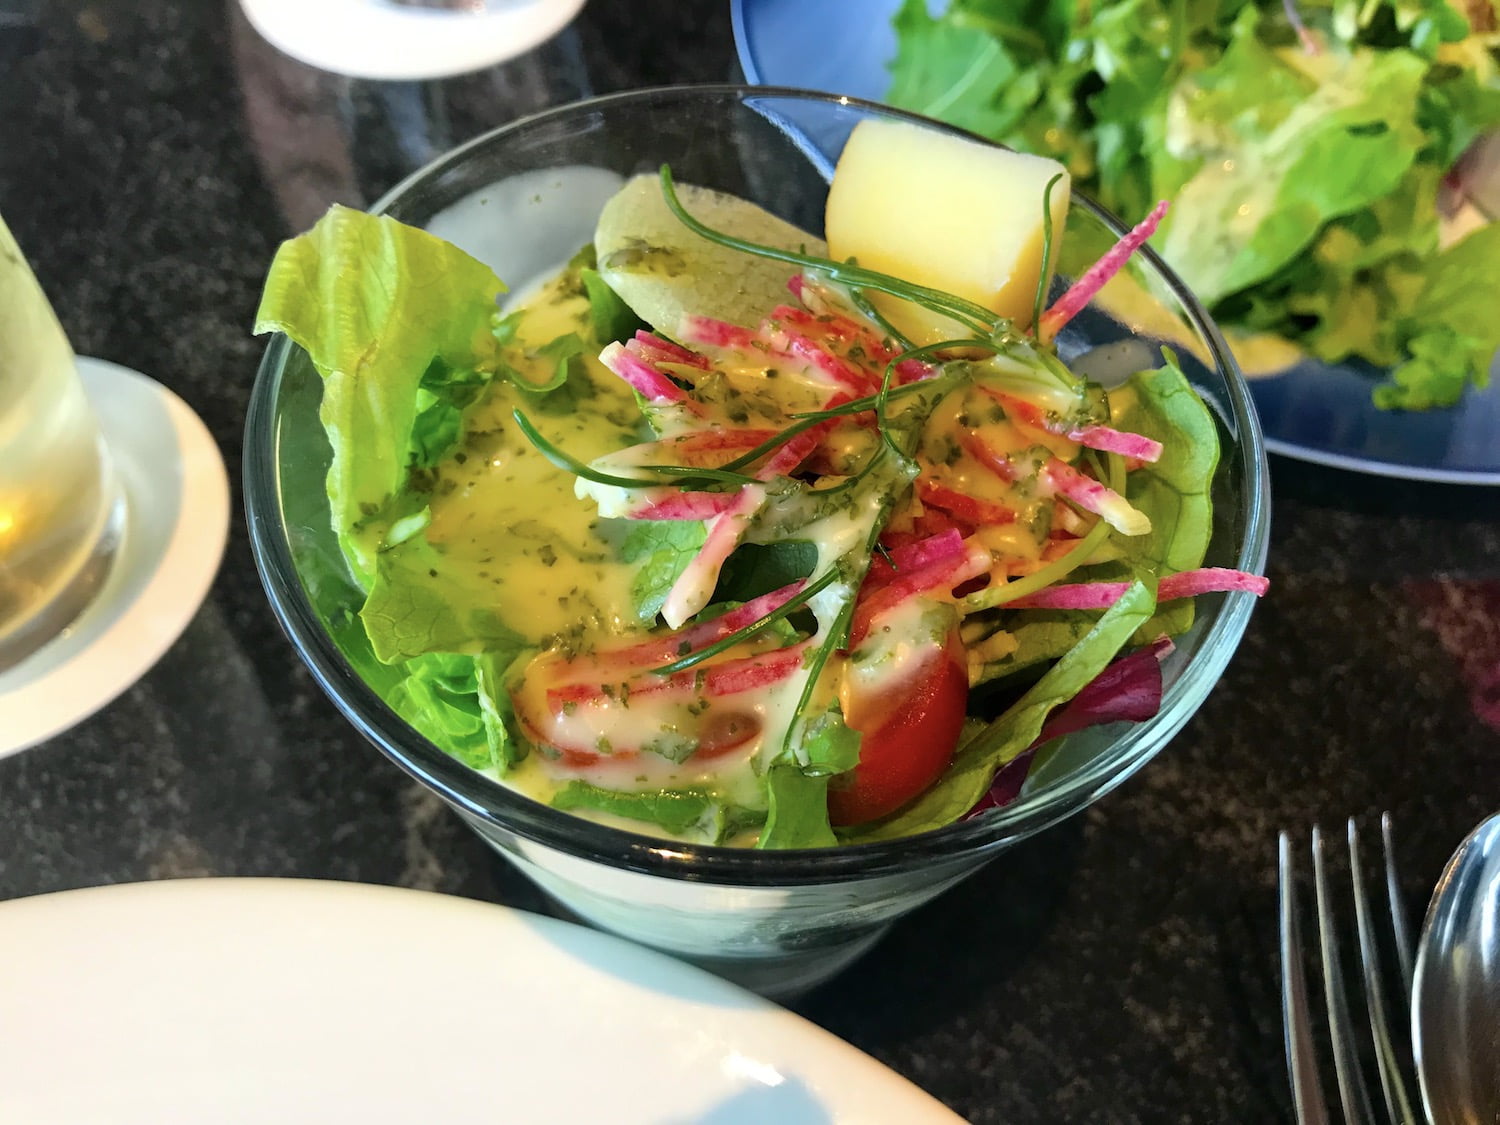 Nippondaira Hotel green salad